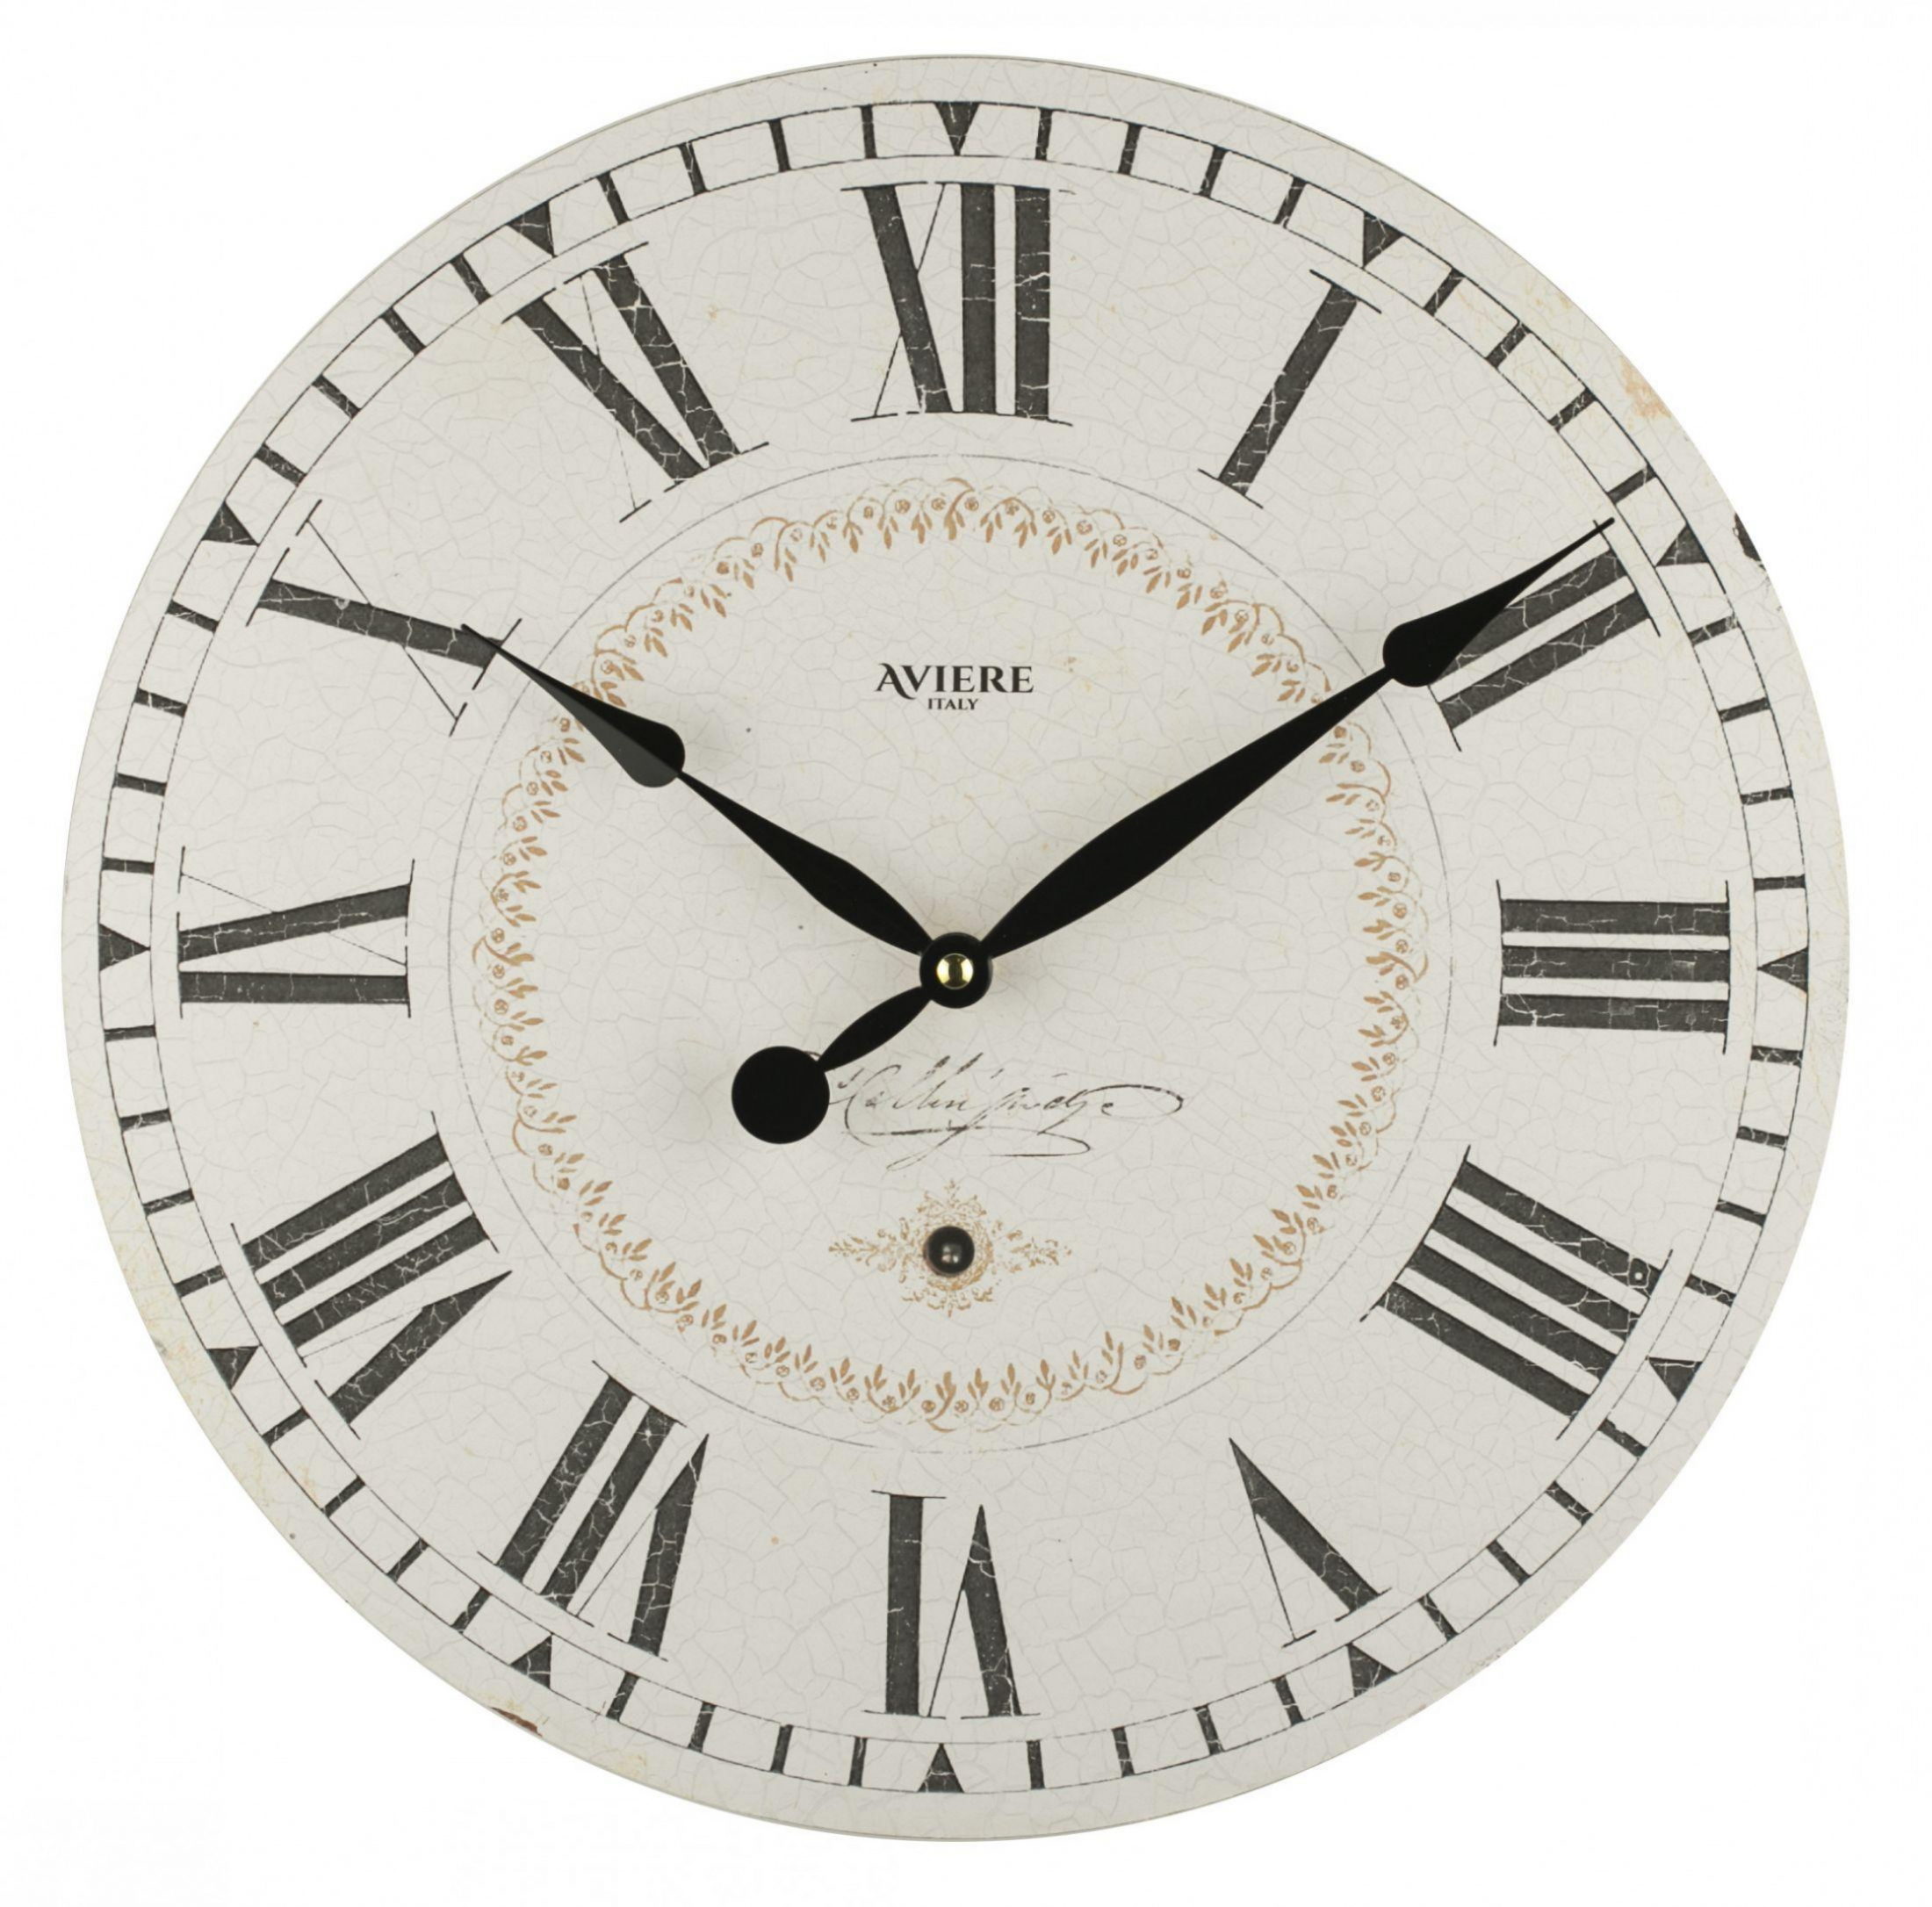 Варианты циферблата. Настенные часы Aviere 25512. Настенные часы Aviere 25540. Настенные часы Aviere 25517. Настенные часы Aviere 25604.